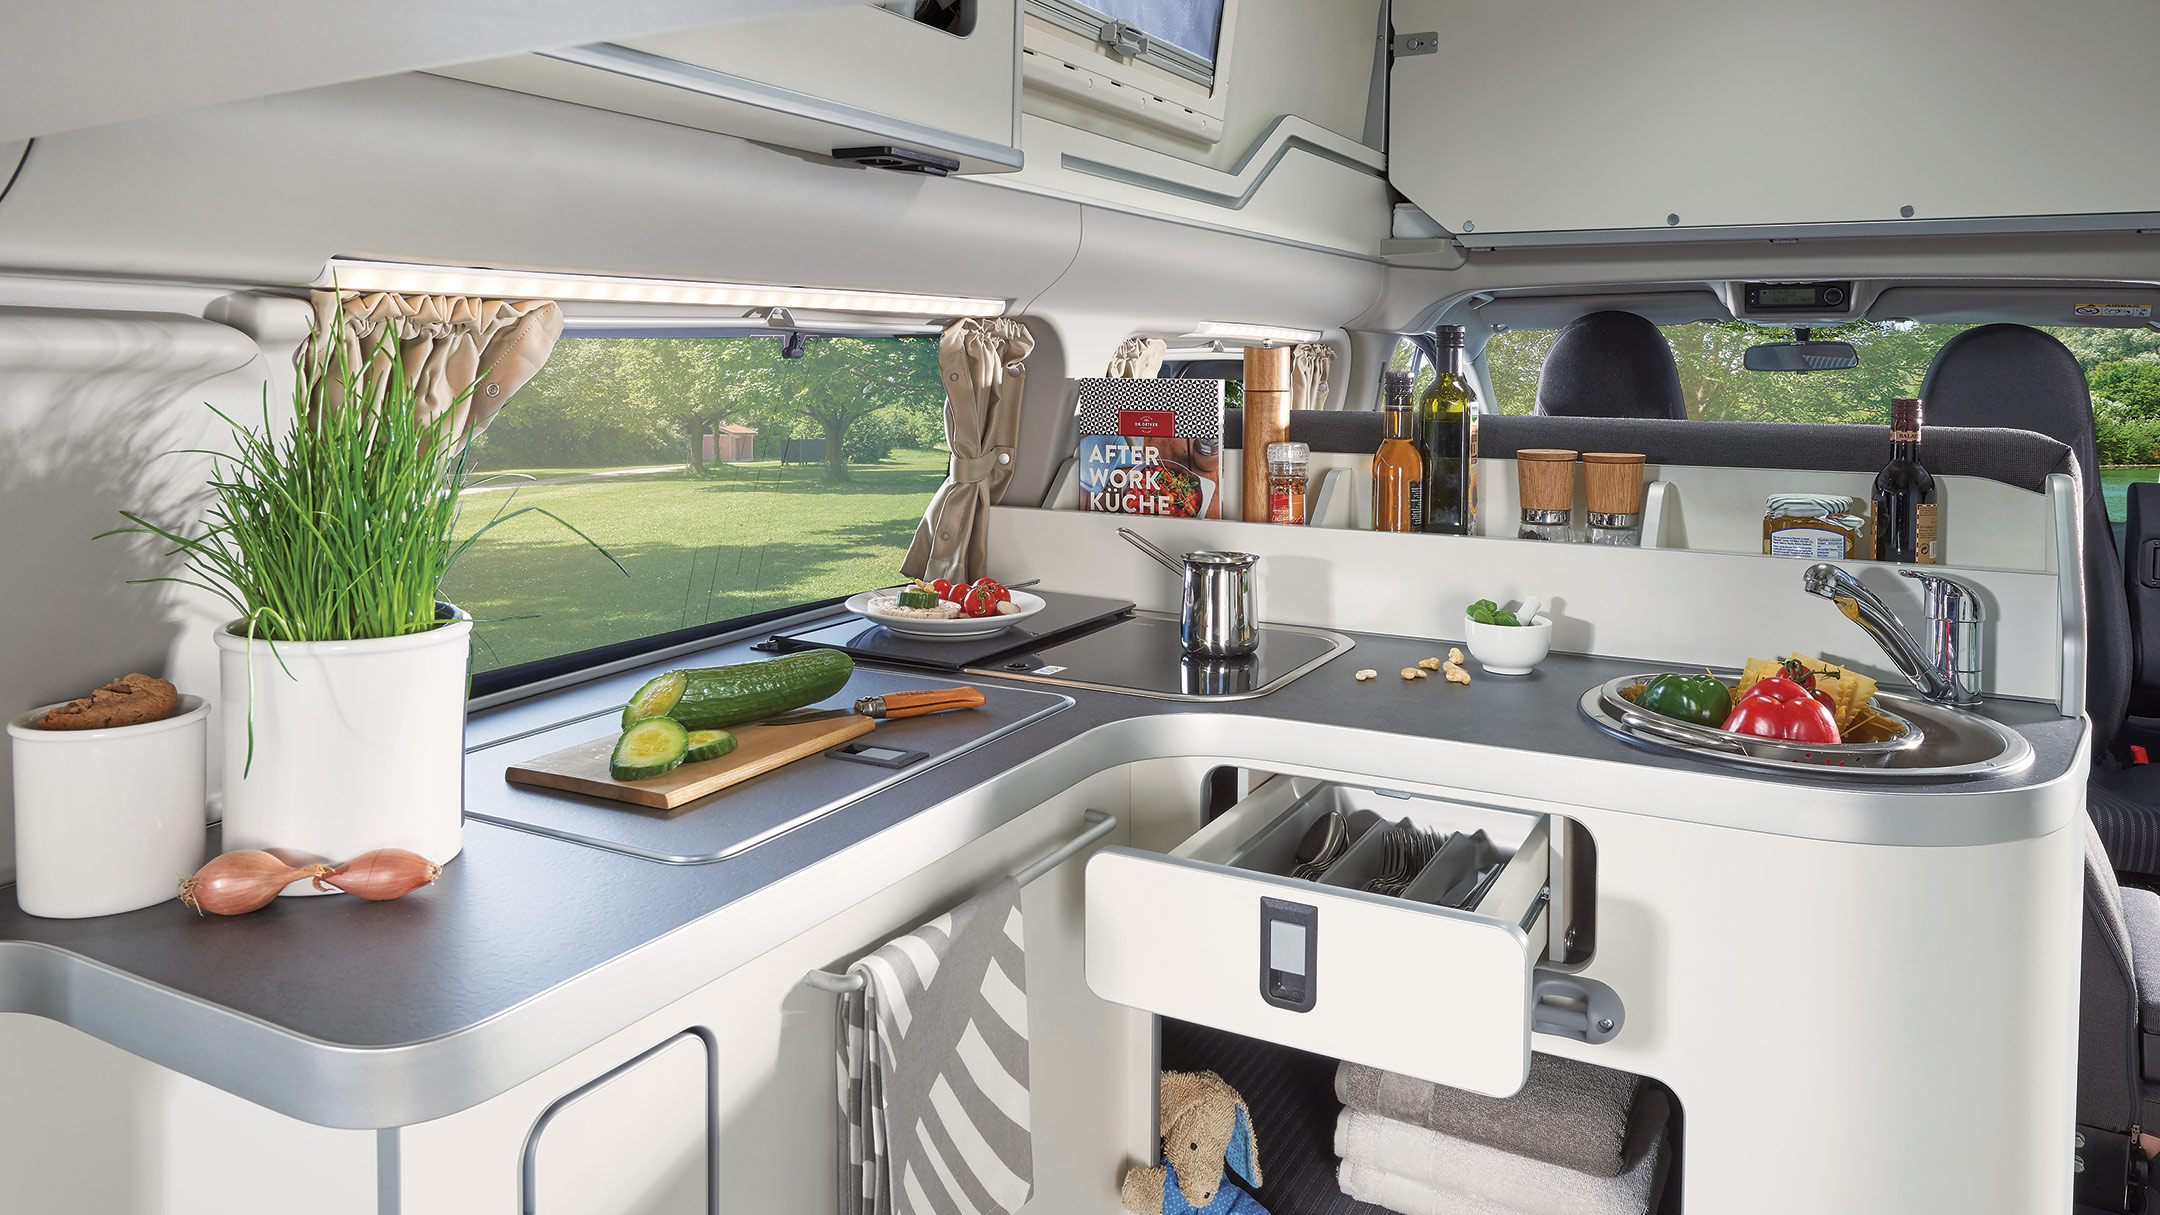 New Ford Transit Custom Nugget interior kitchen view